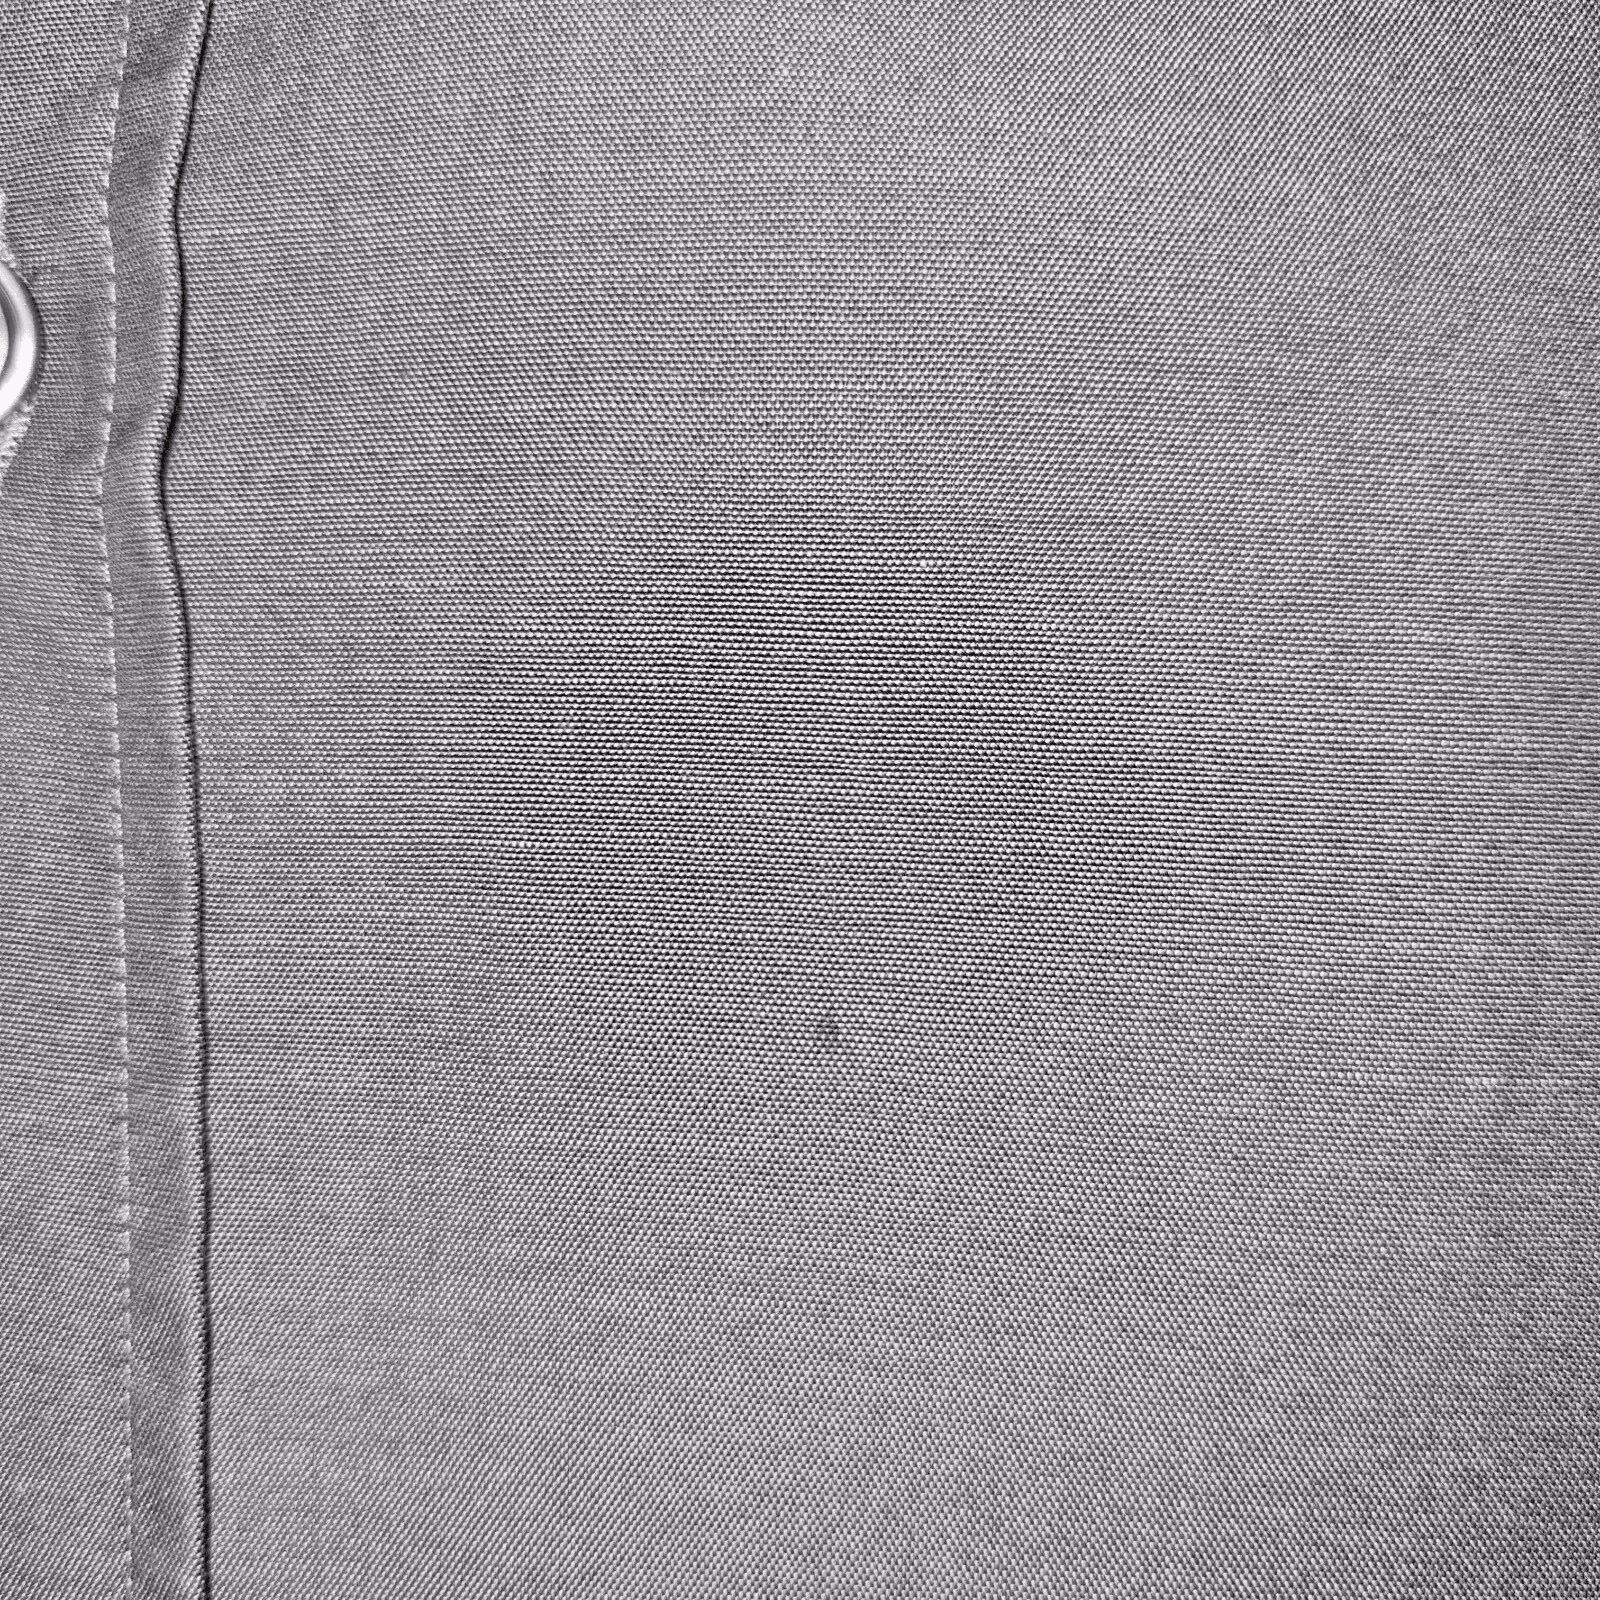 Men's Hugo Boss Long Sleeve Grey Classic Shirt Classic Fit Size 16 inch EU 41 - Bonnie Lassio